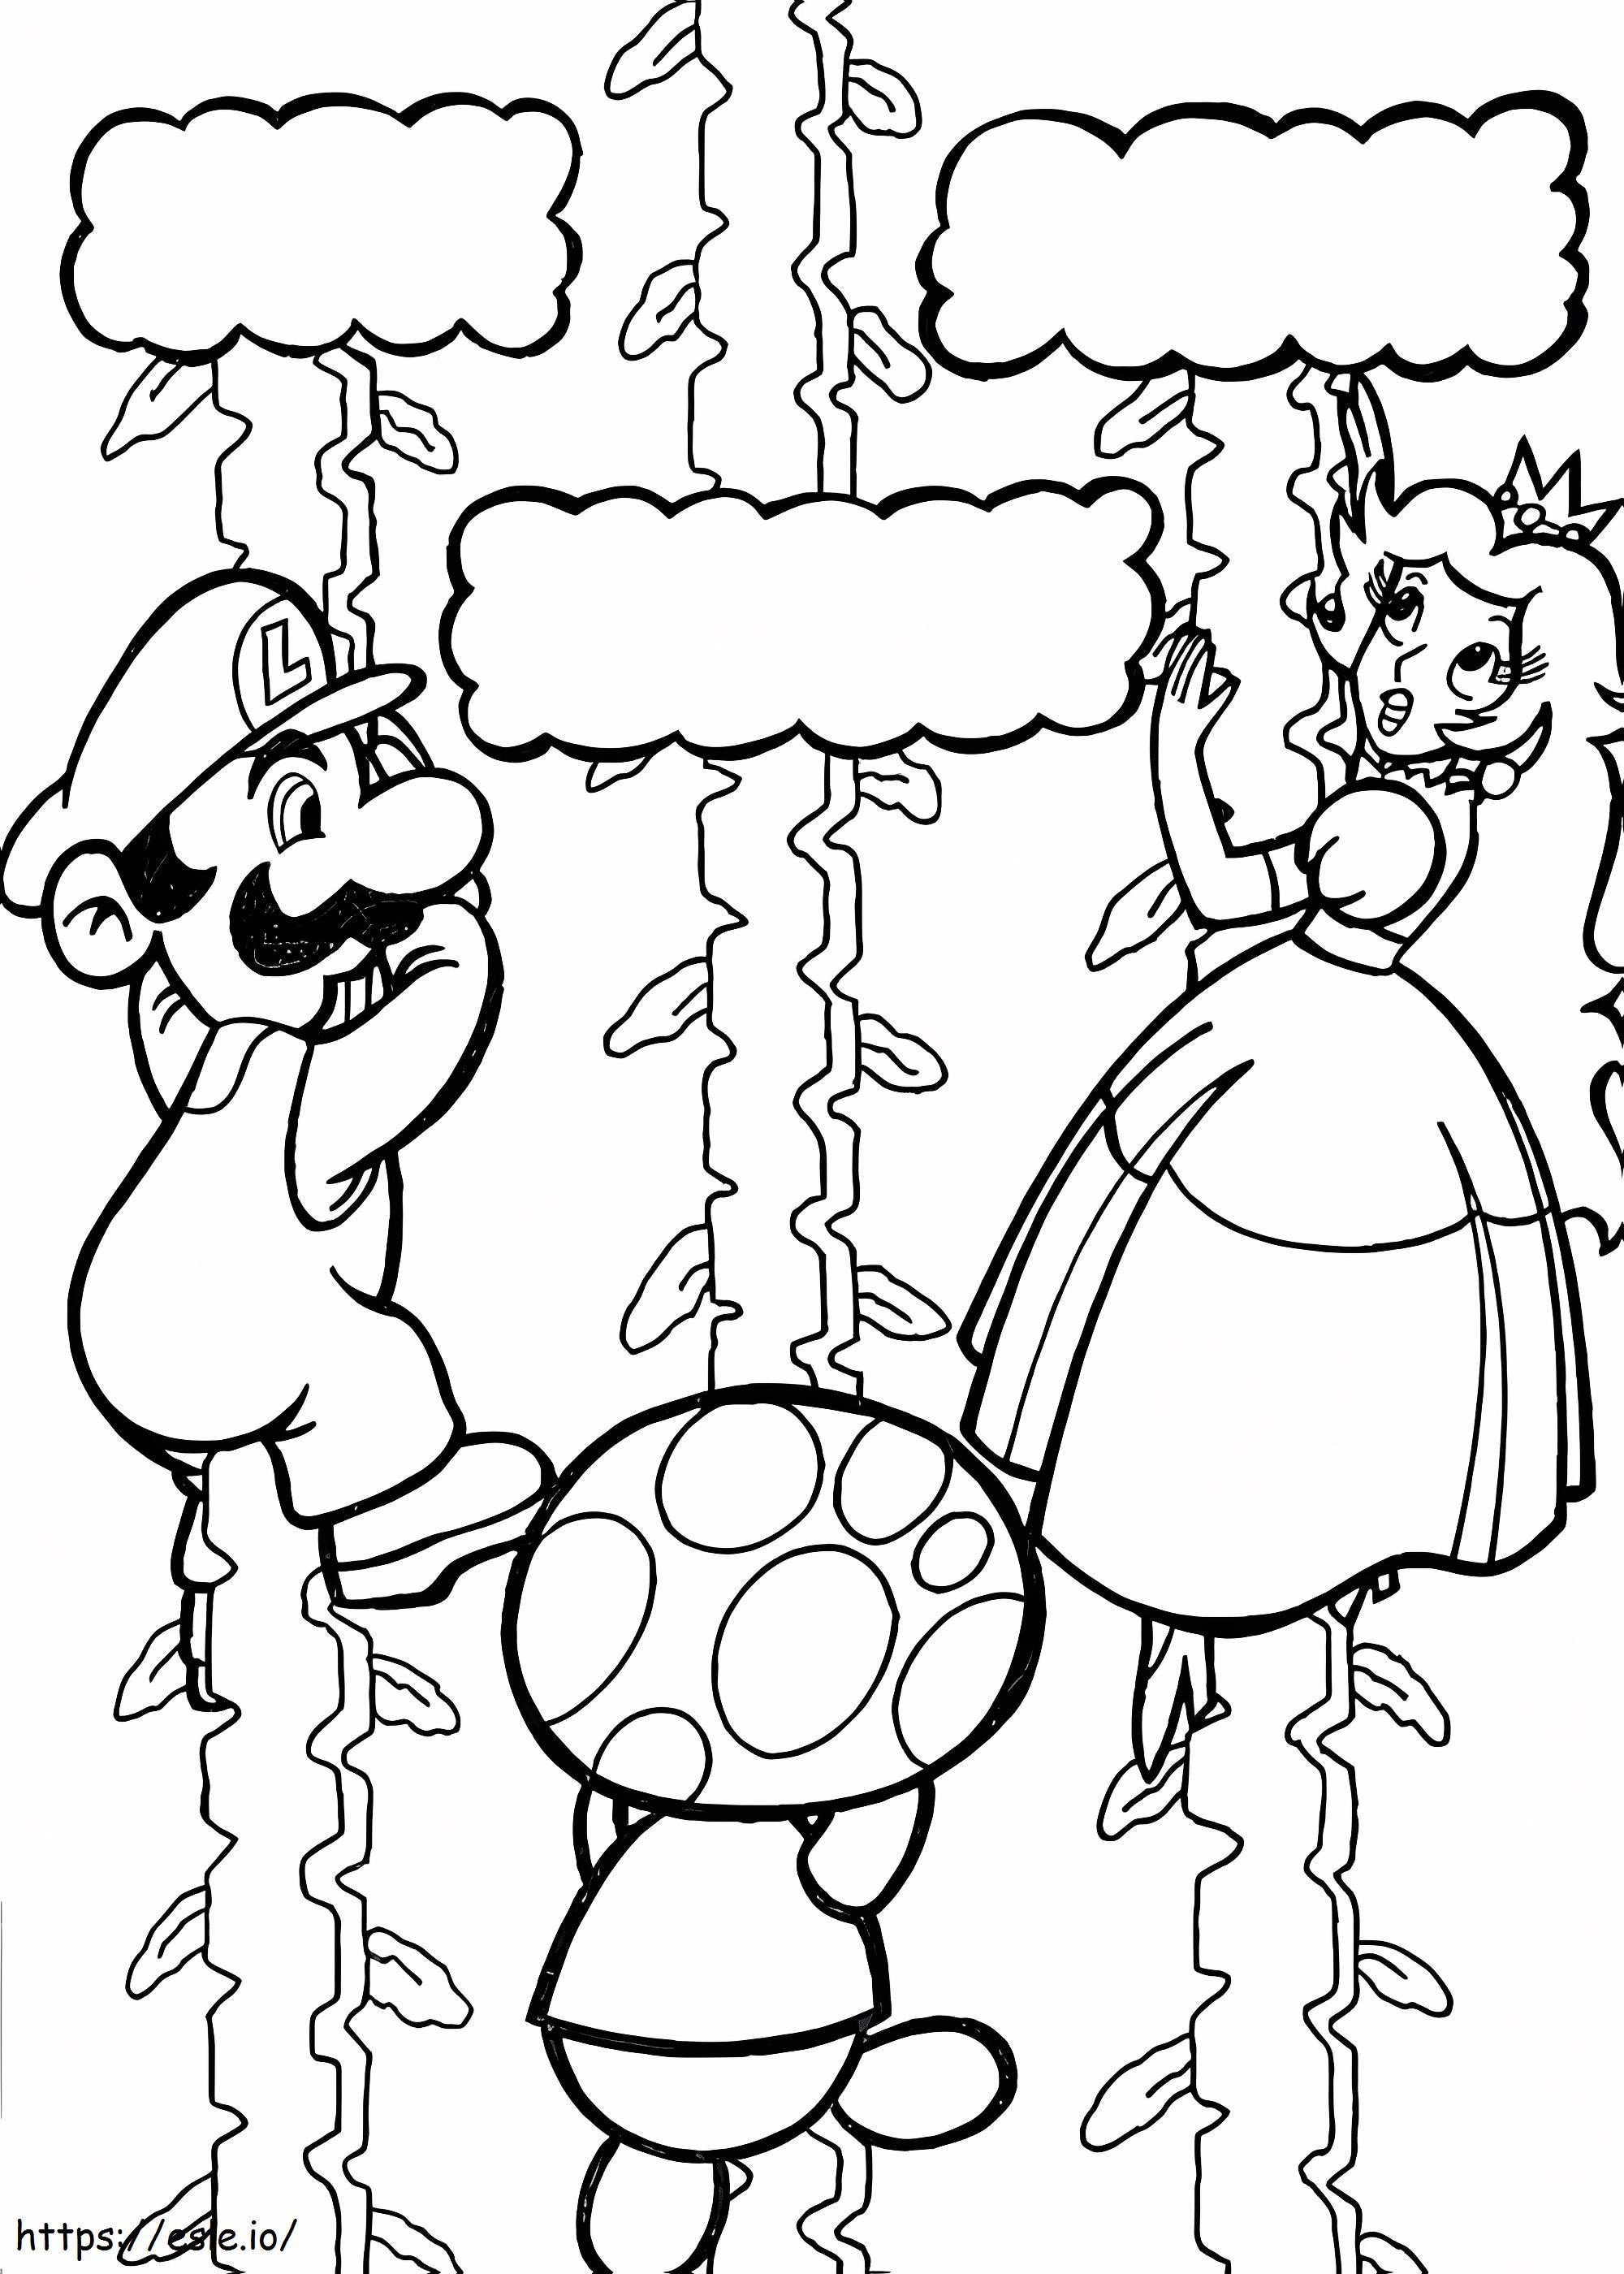 Mario Is Saving Princess coloring page